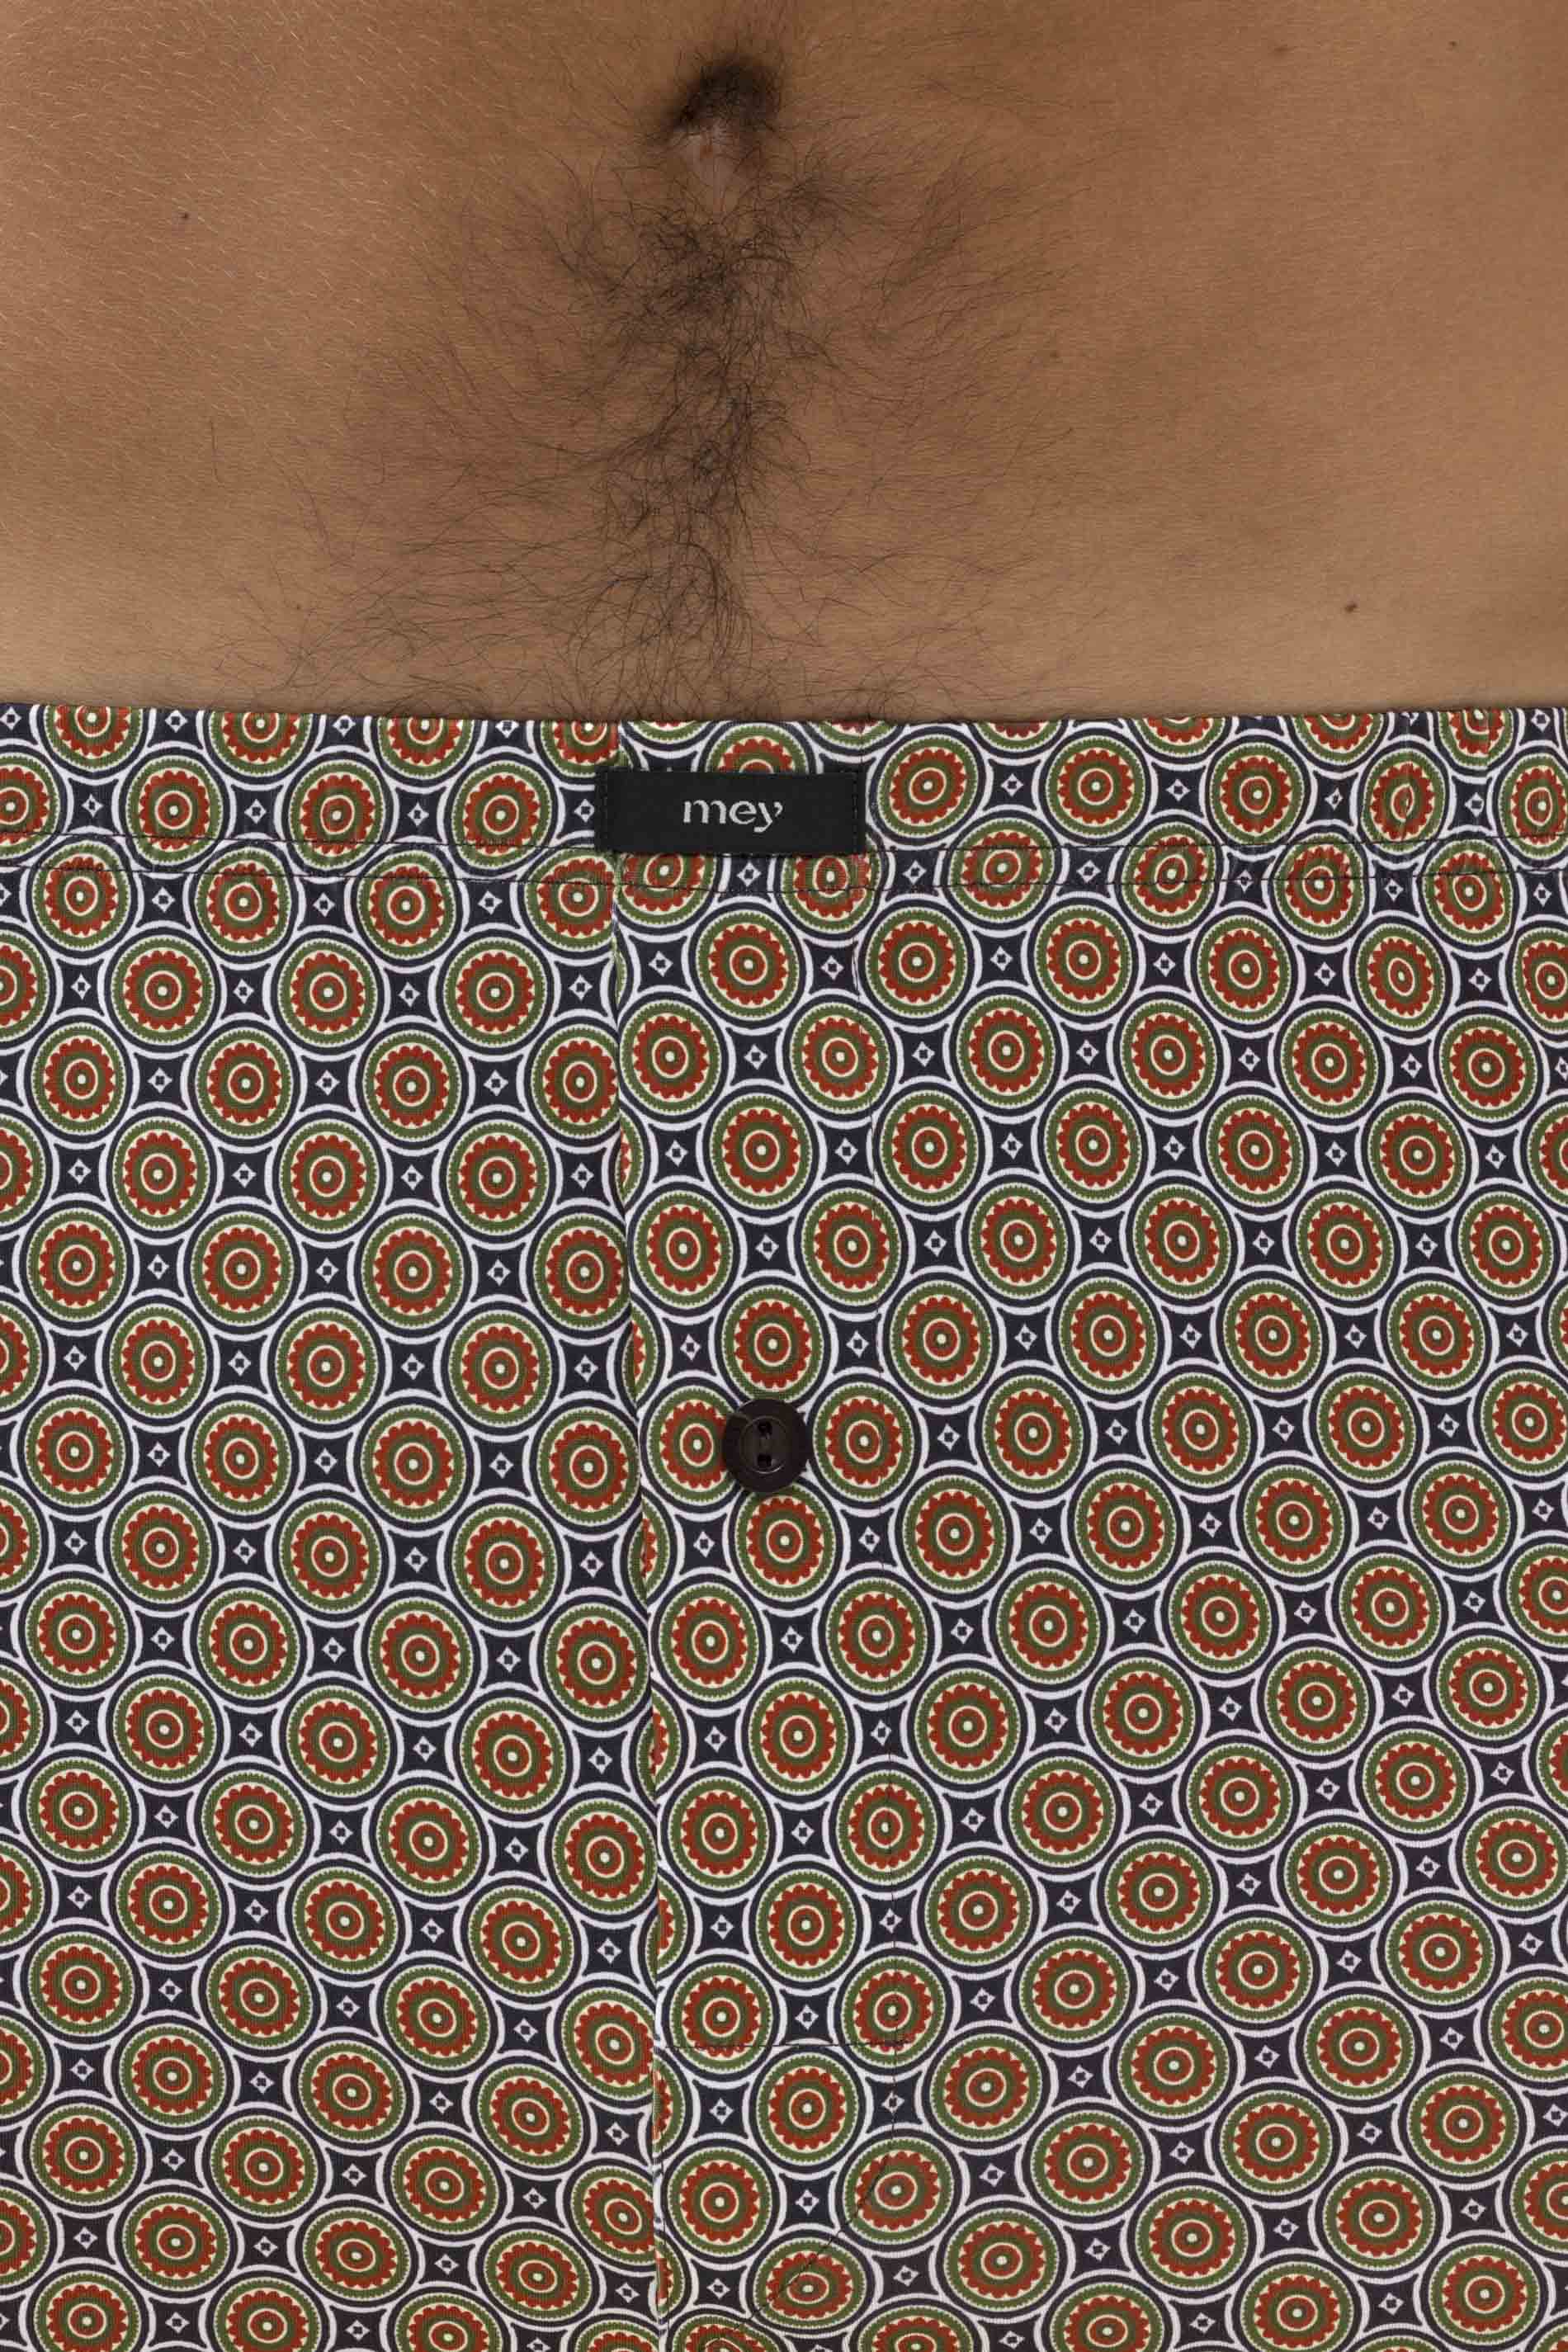 Boxer shorts Serie Circles Detail View 01 | mey®